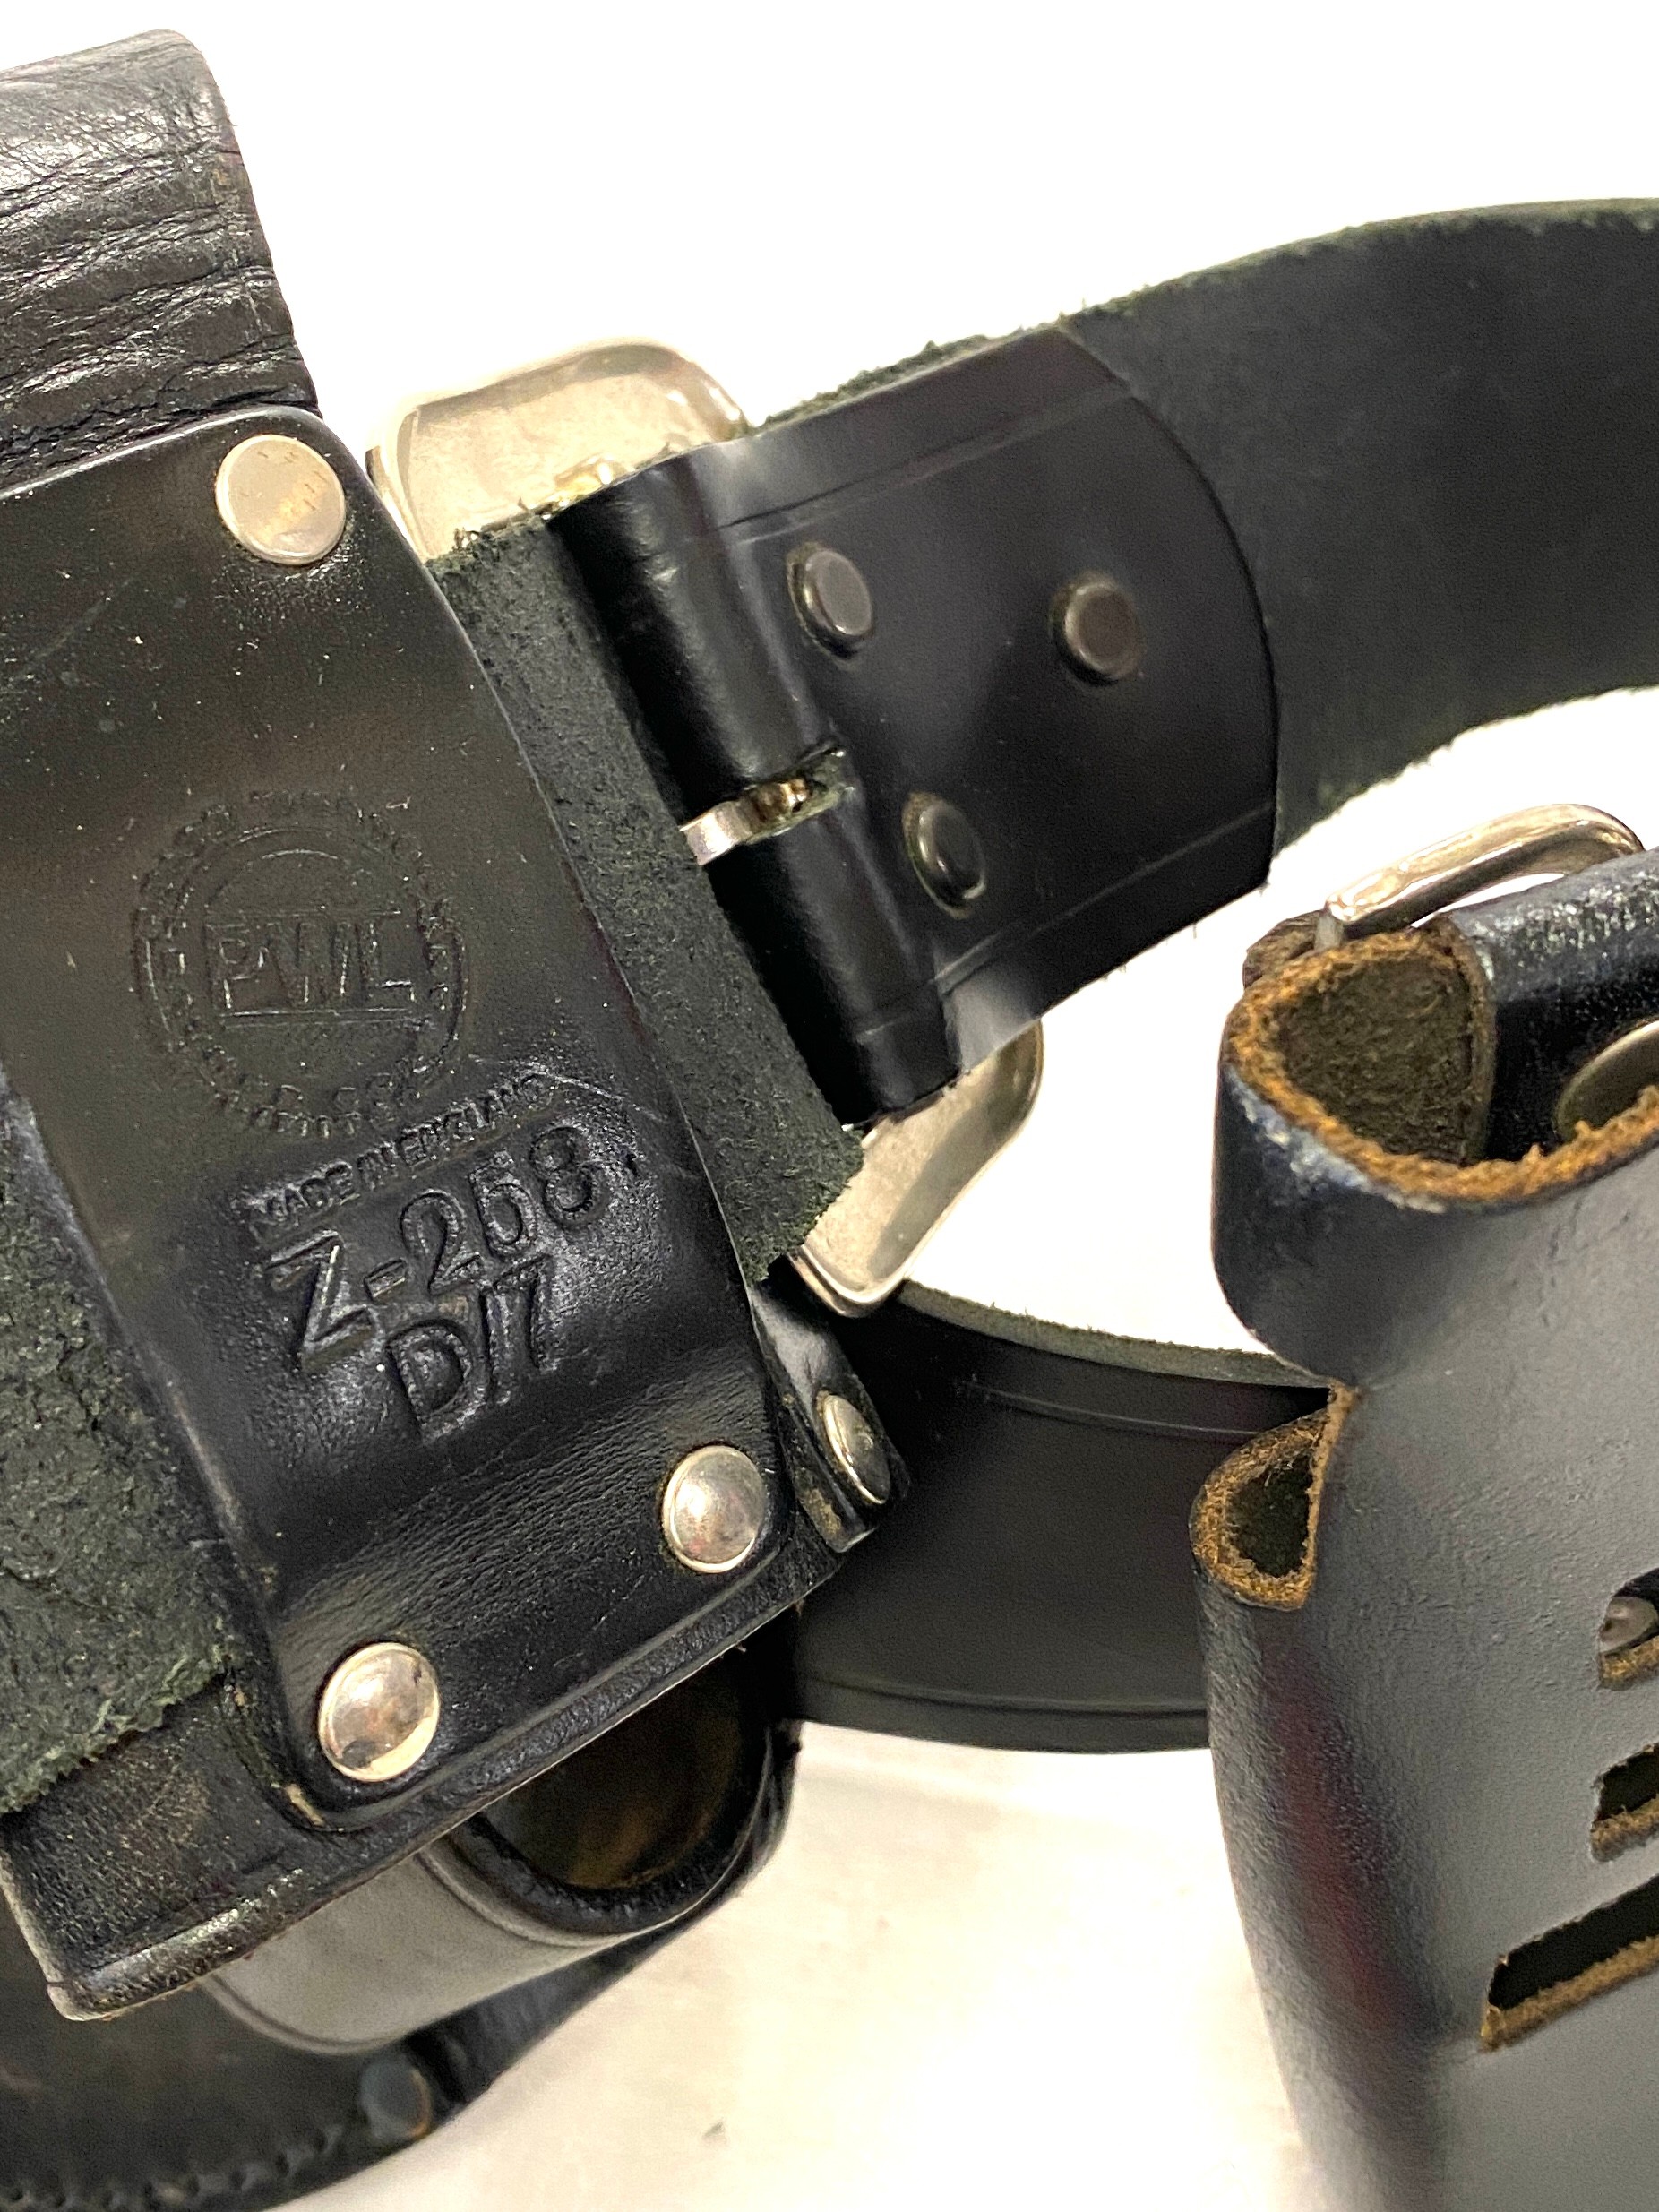 Leather P9206 PWL duty belt - Image 4 of 4